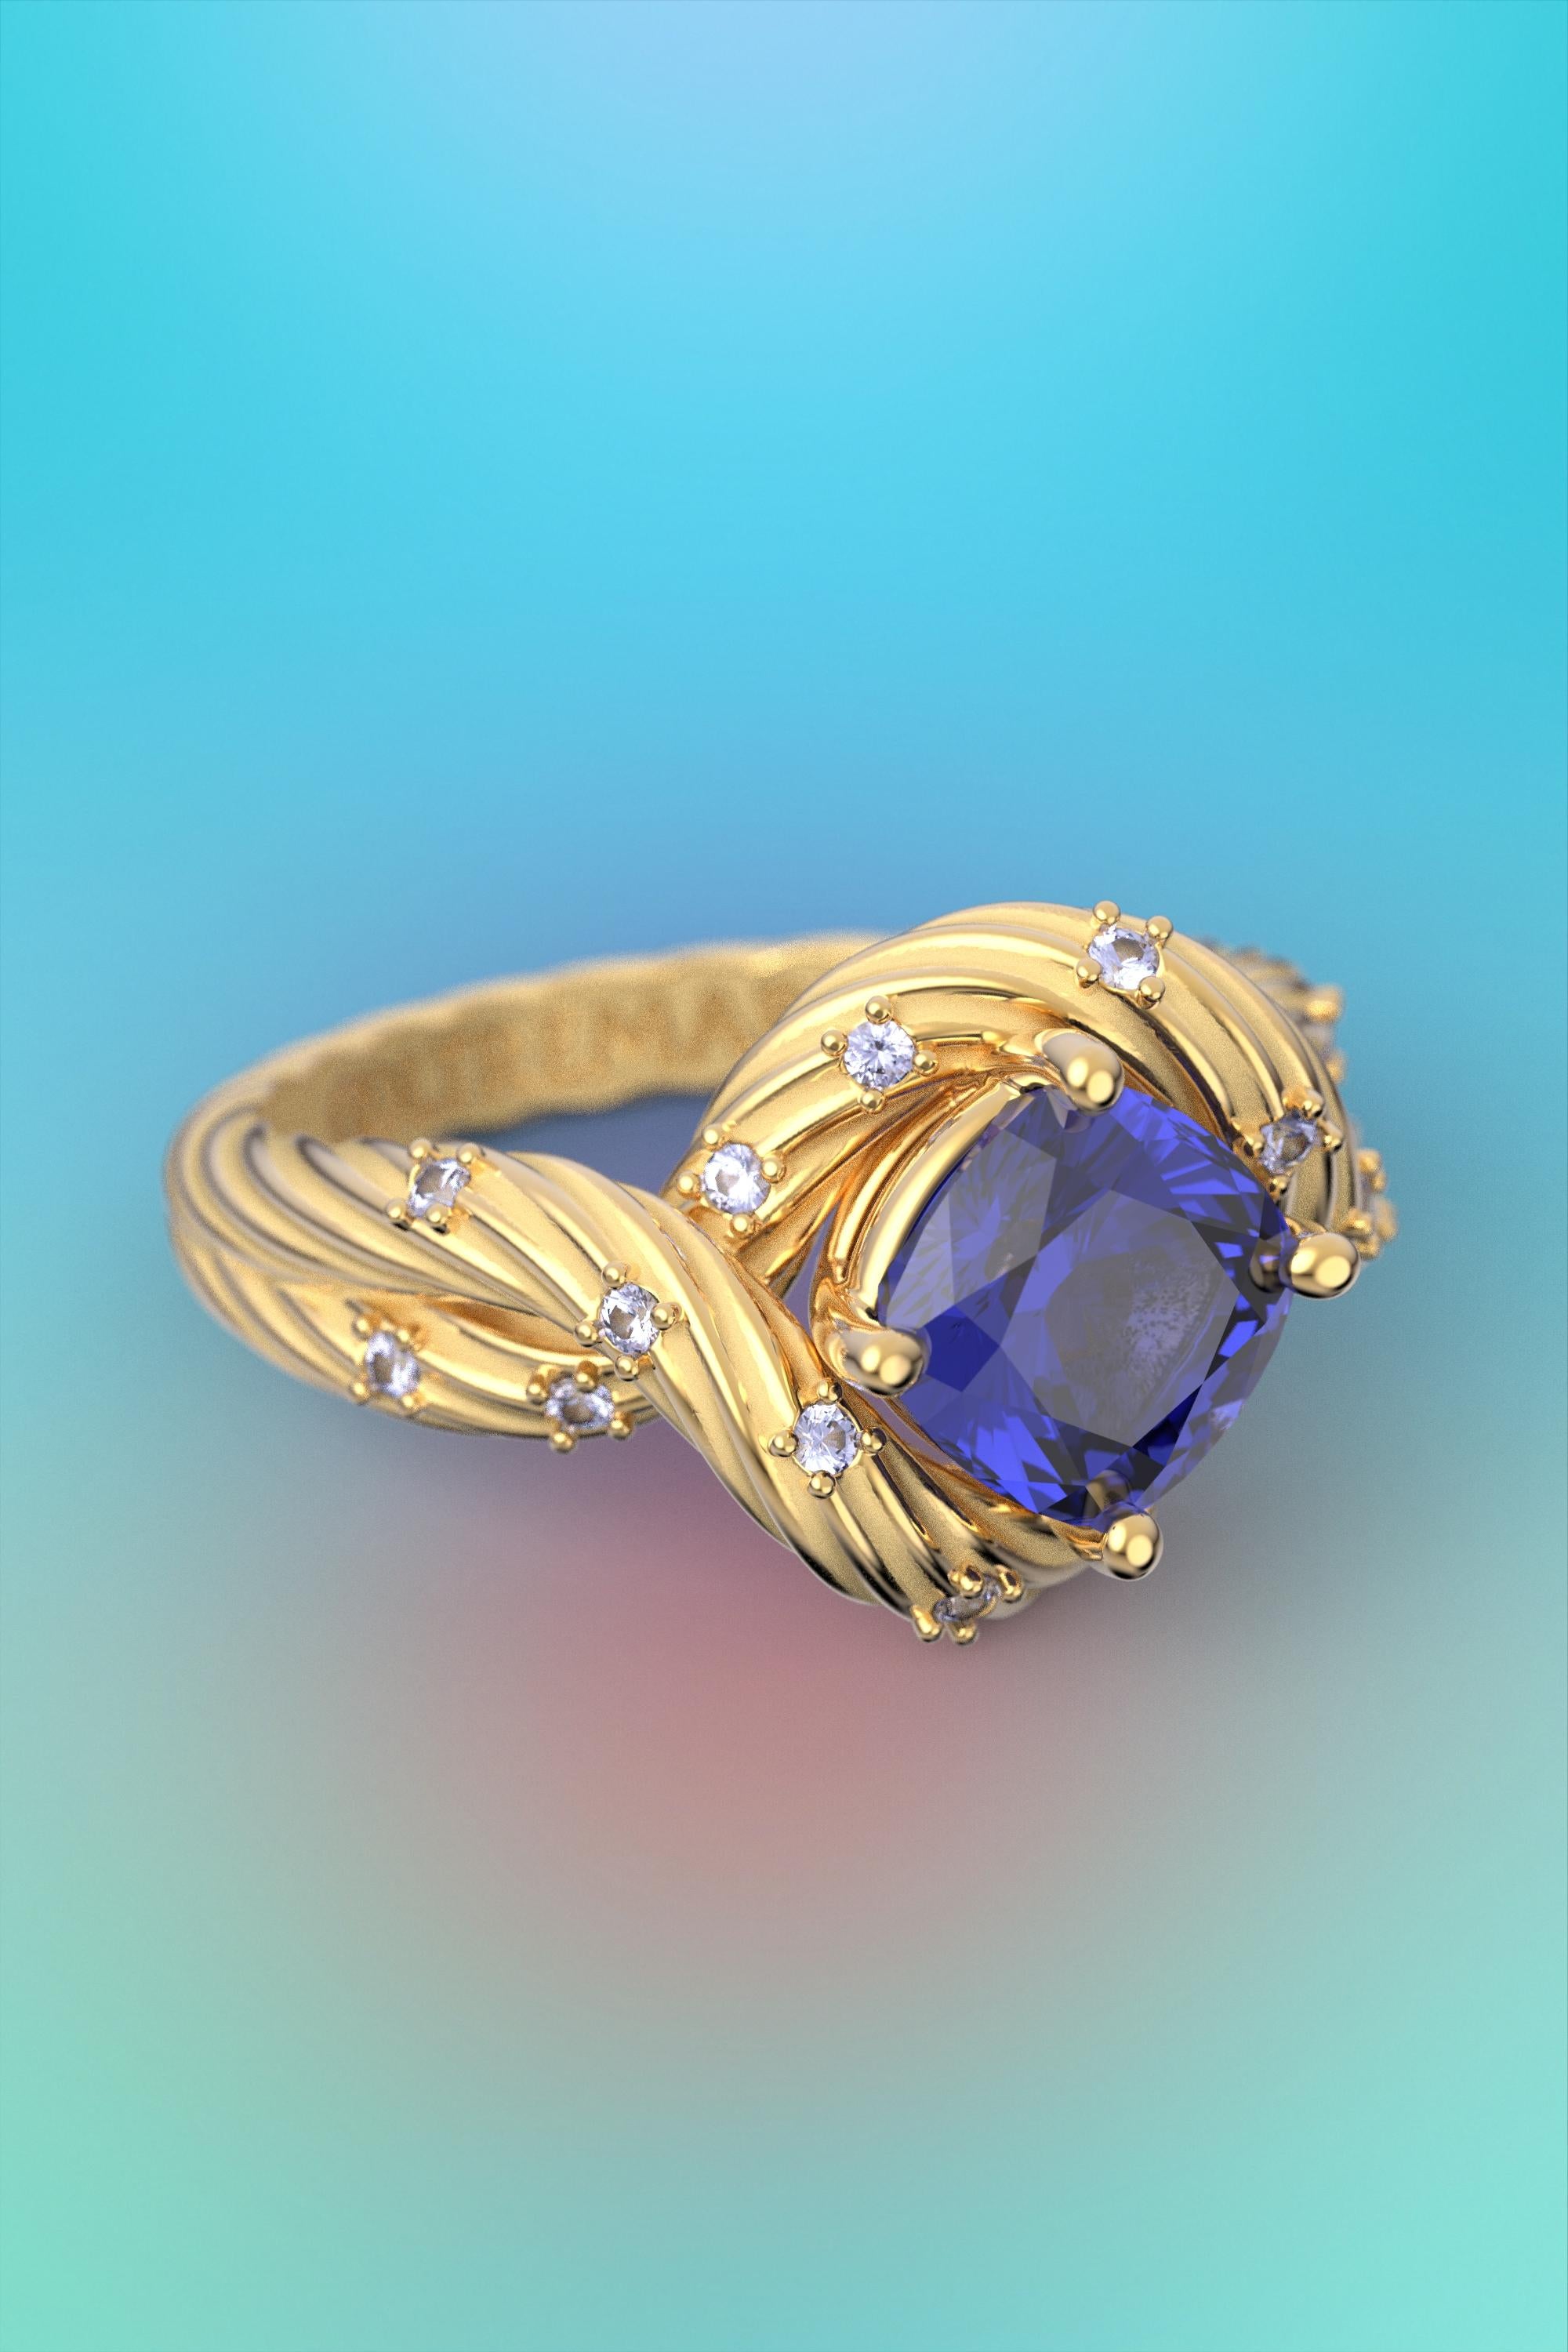 For Sale:  Tanzanite and Diamonds Statement Ring in 18k Solid Gold, Italian Fine Jewelry 12